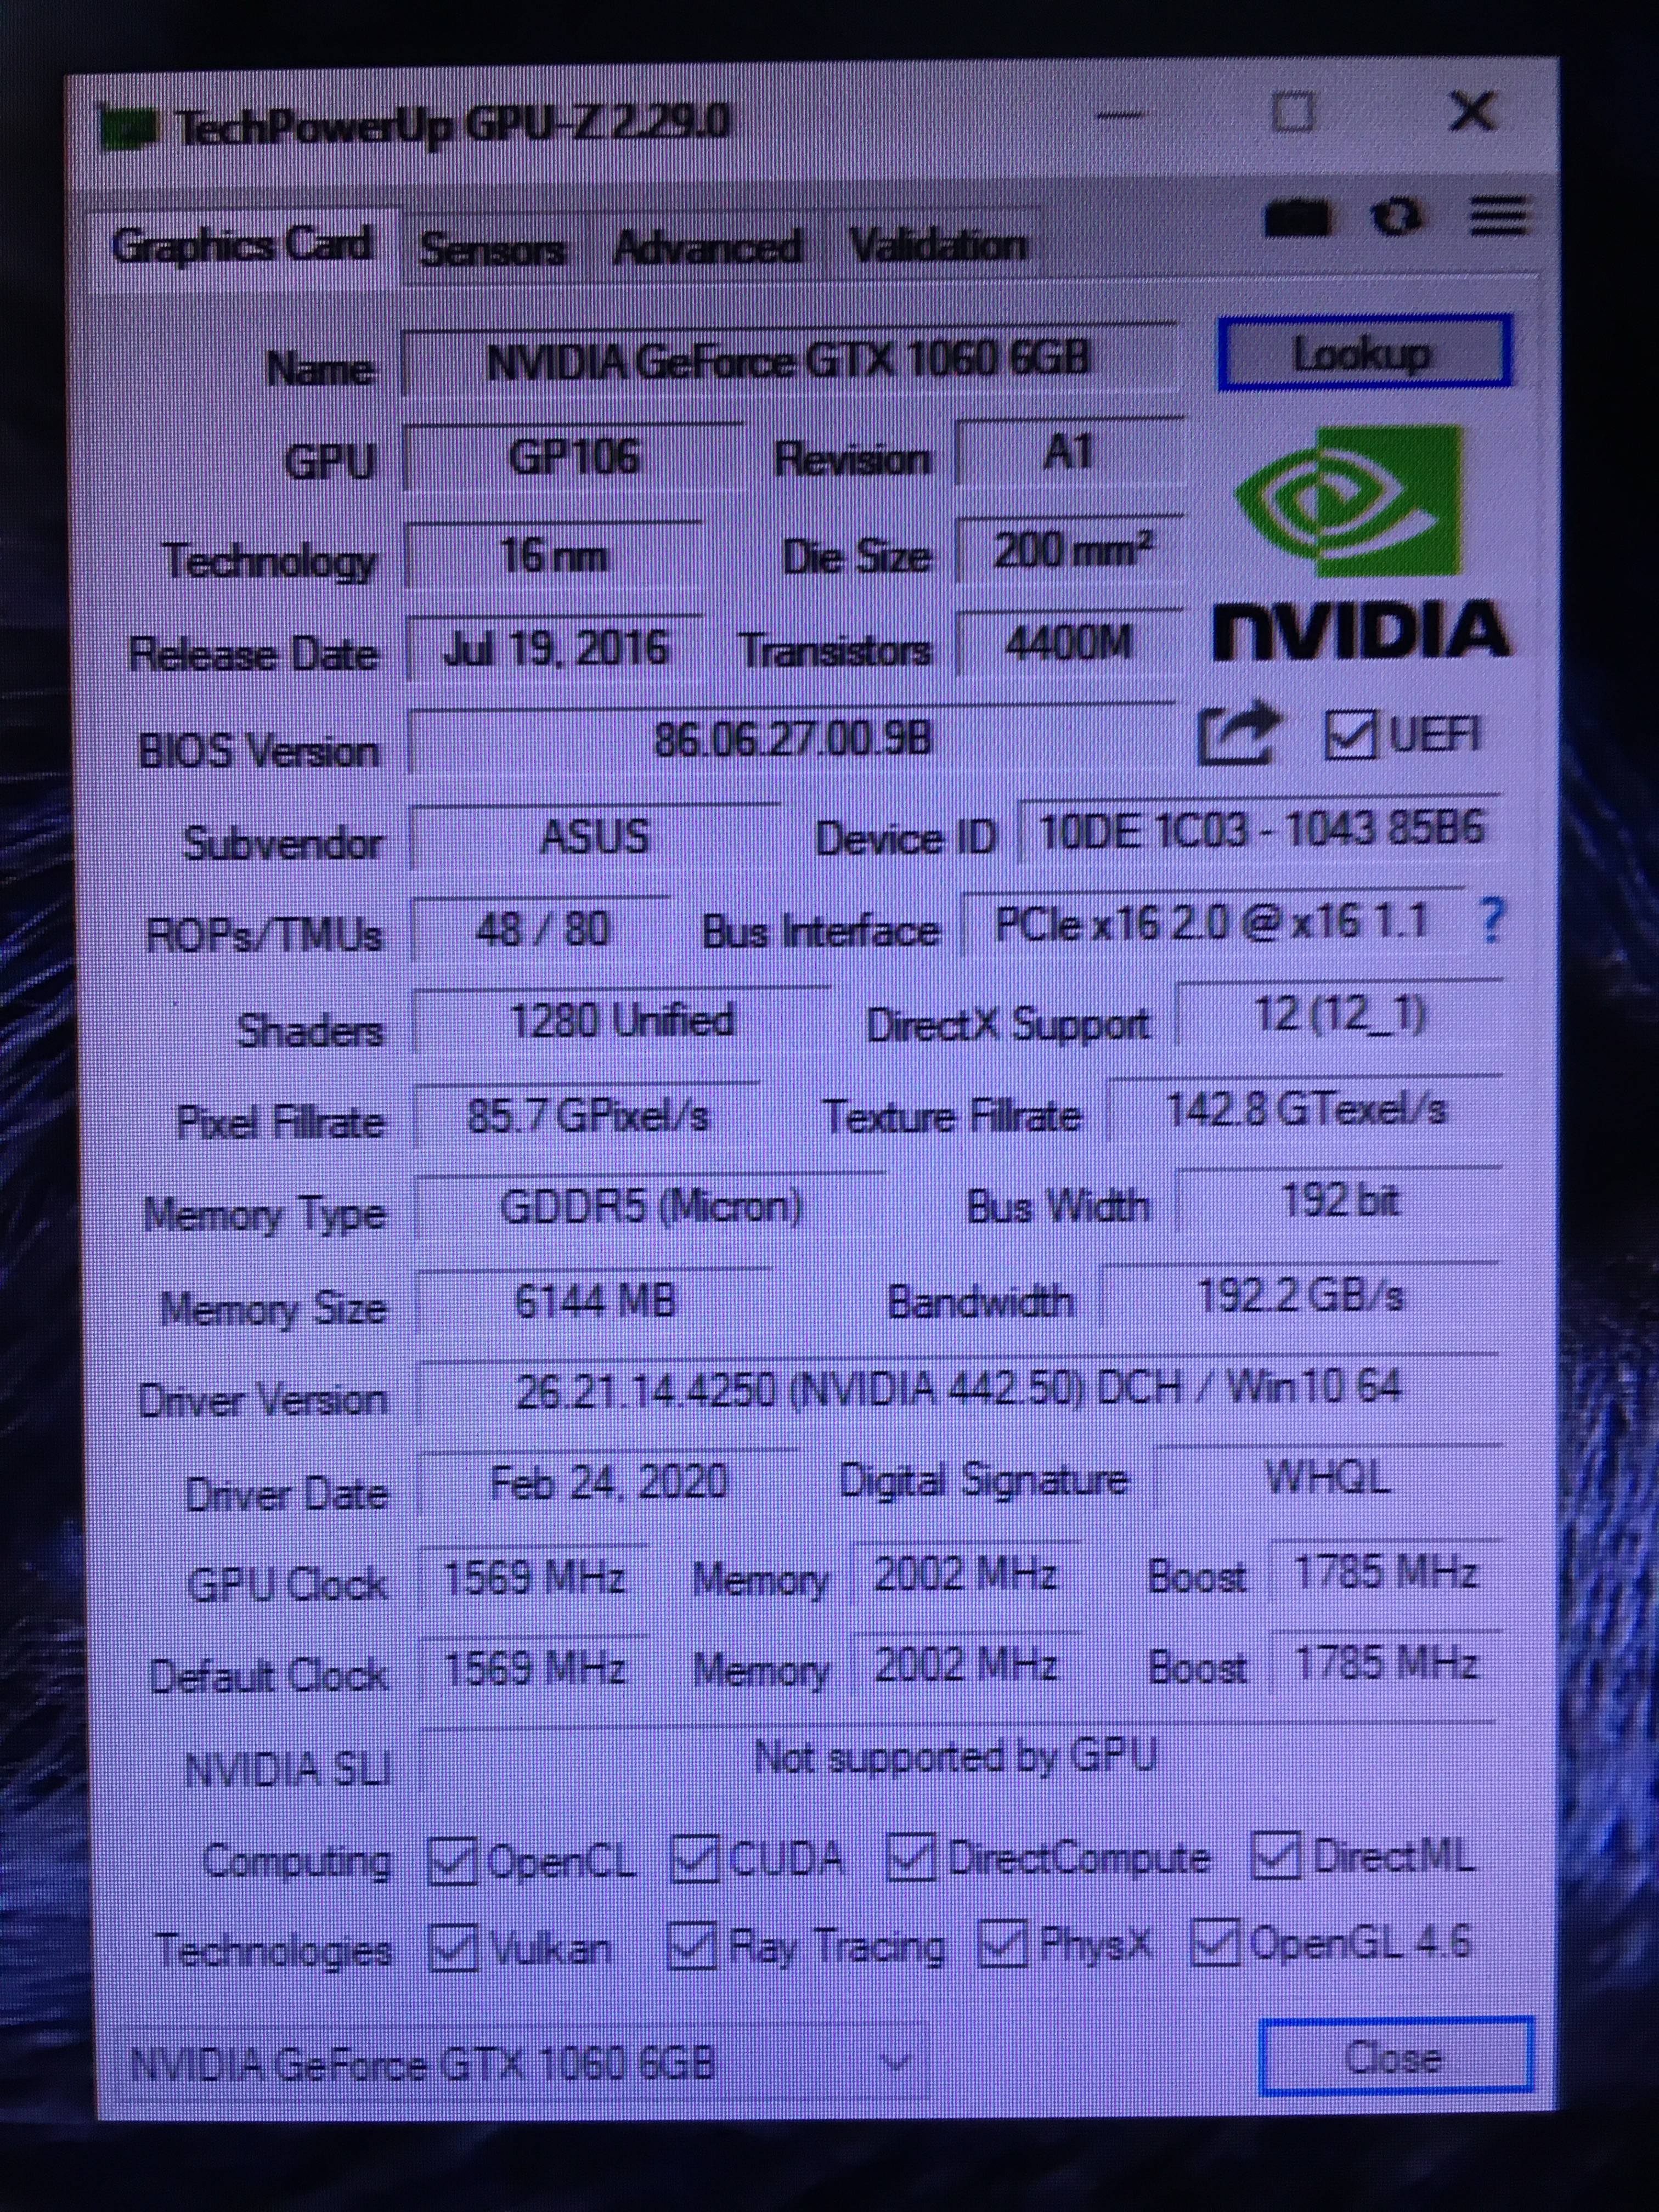 toksicitet håndflade Sherlock Holmes NVIDIA GeForce GTX 1060 6GB says 2047MB ?? - Graphics Cards - Linus Tech  Tips